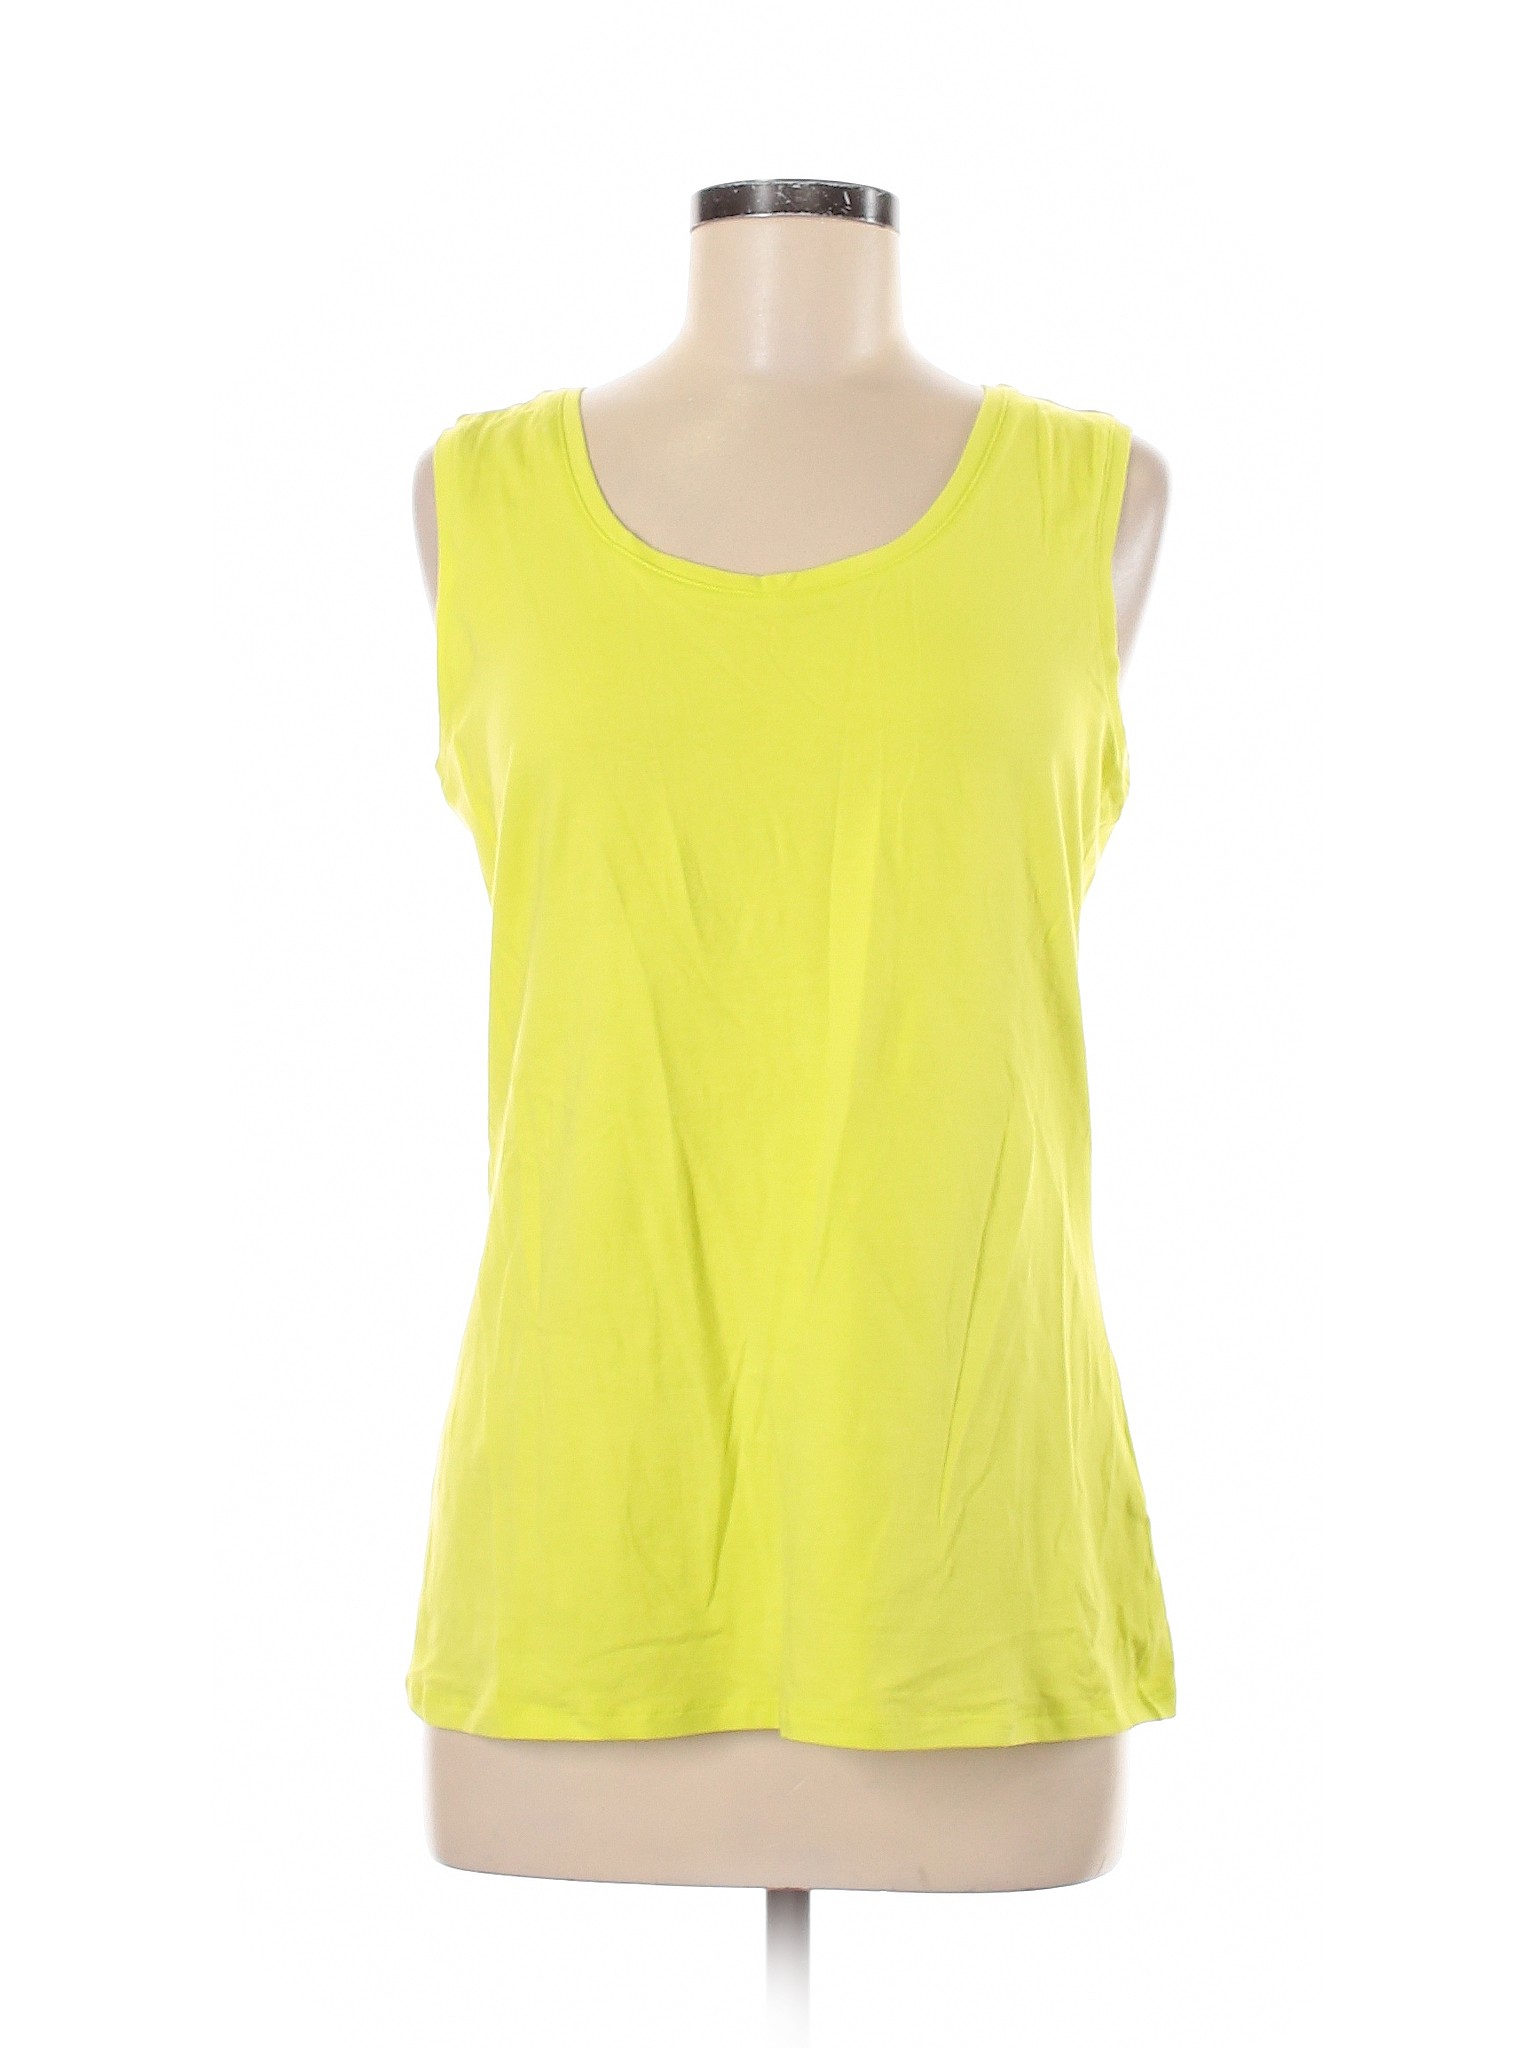 Assorted Brands Women Yellow Tank Top M | eBay